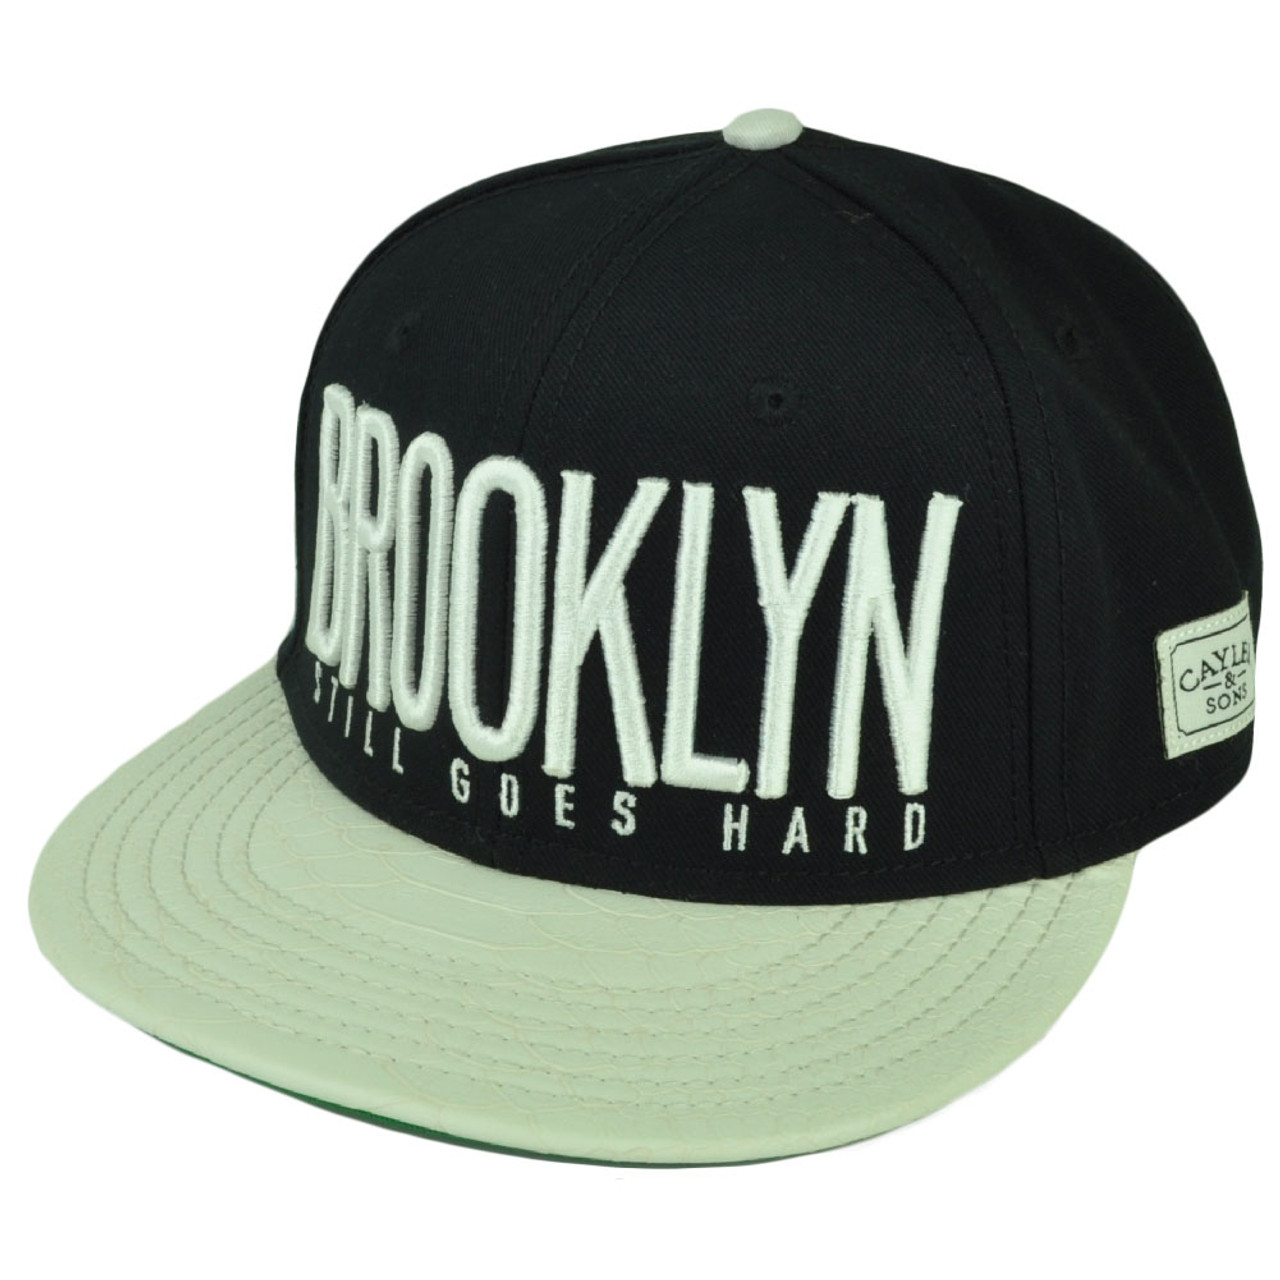 Cayler and Sons Brooklyn Still Goes Hard Snake Skin Flat Bill Snap buckle  Hat Cap - Cap Store